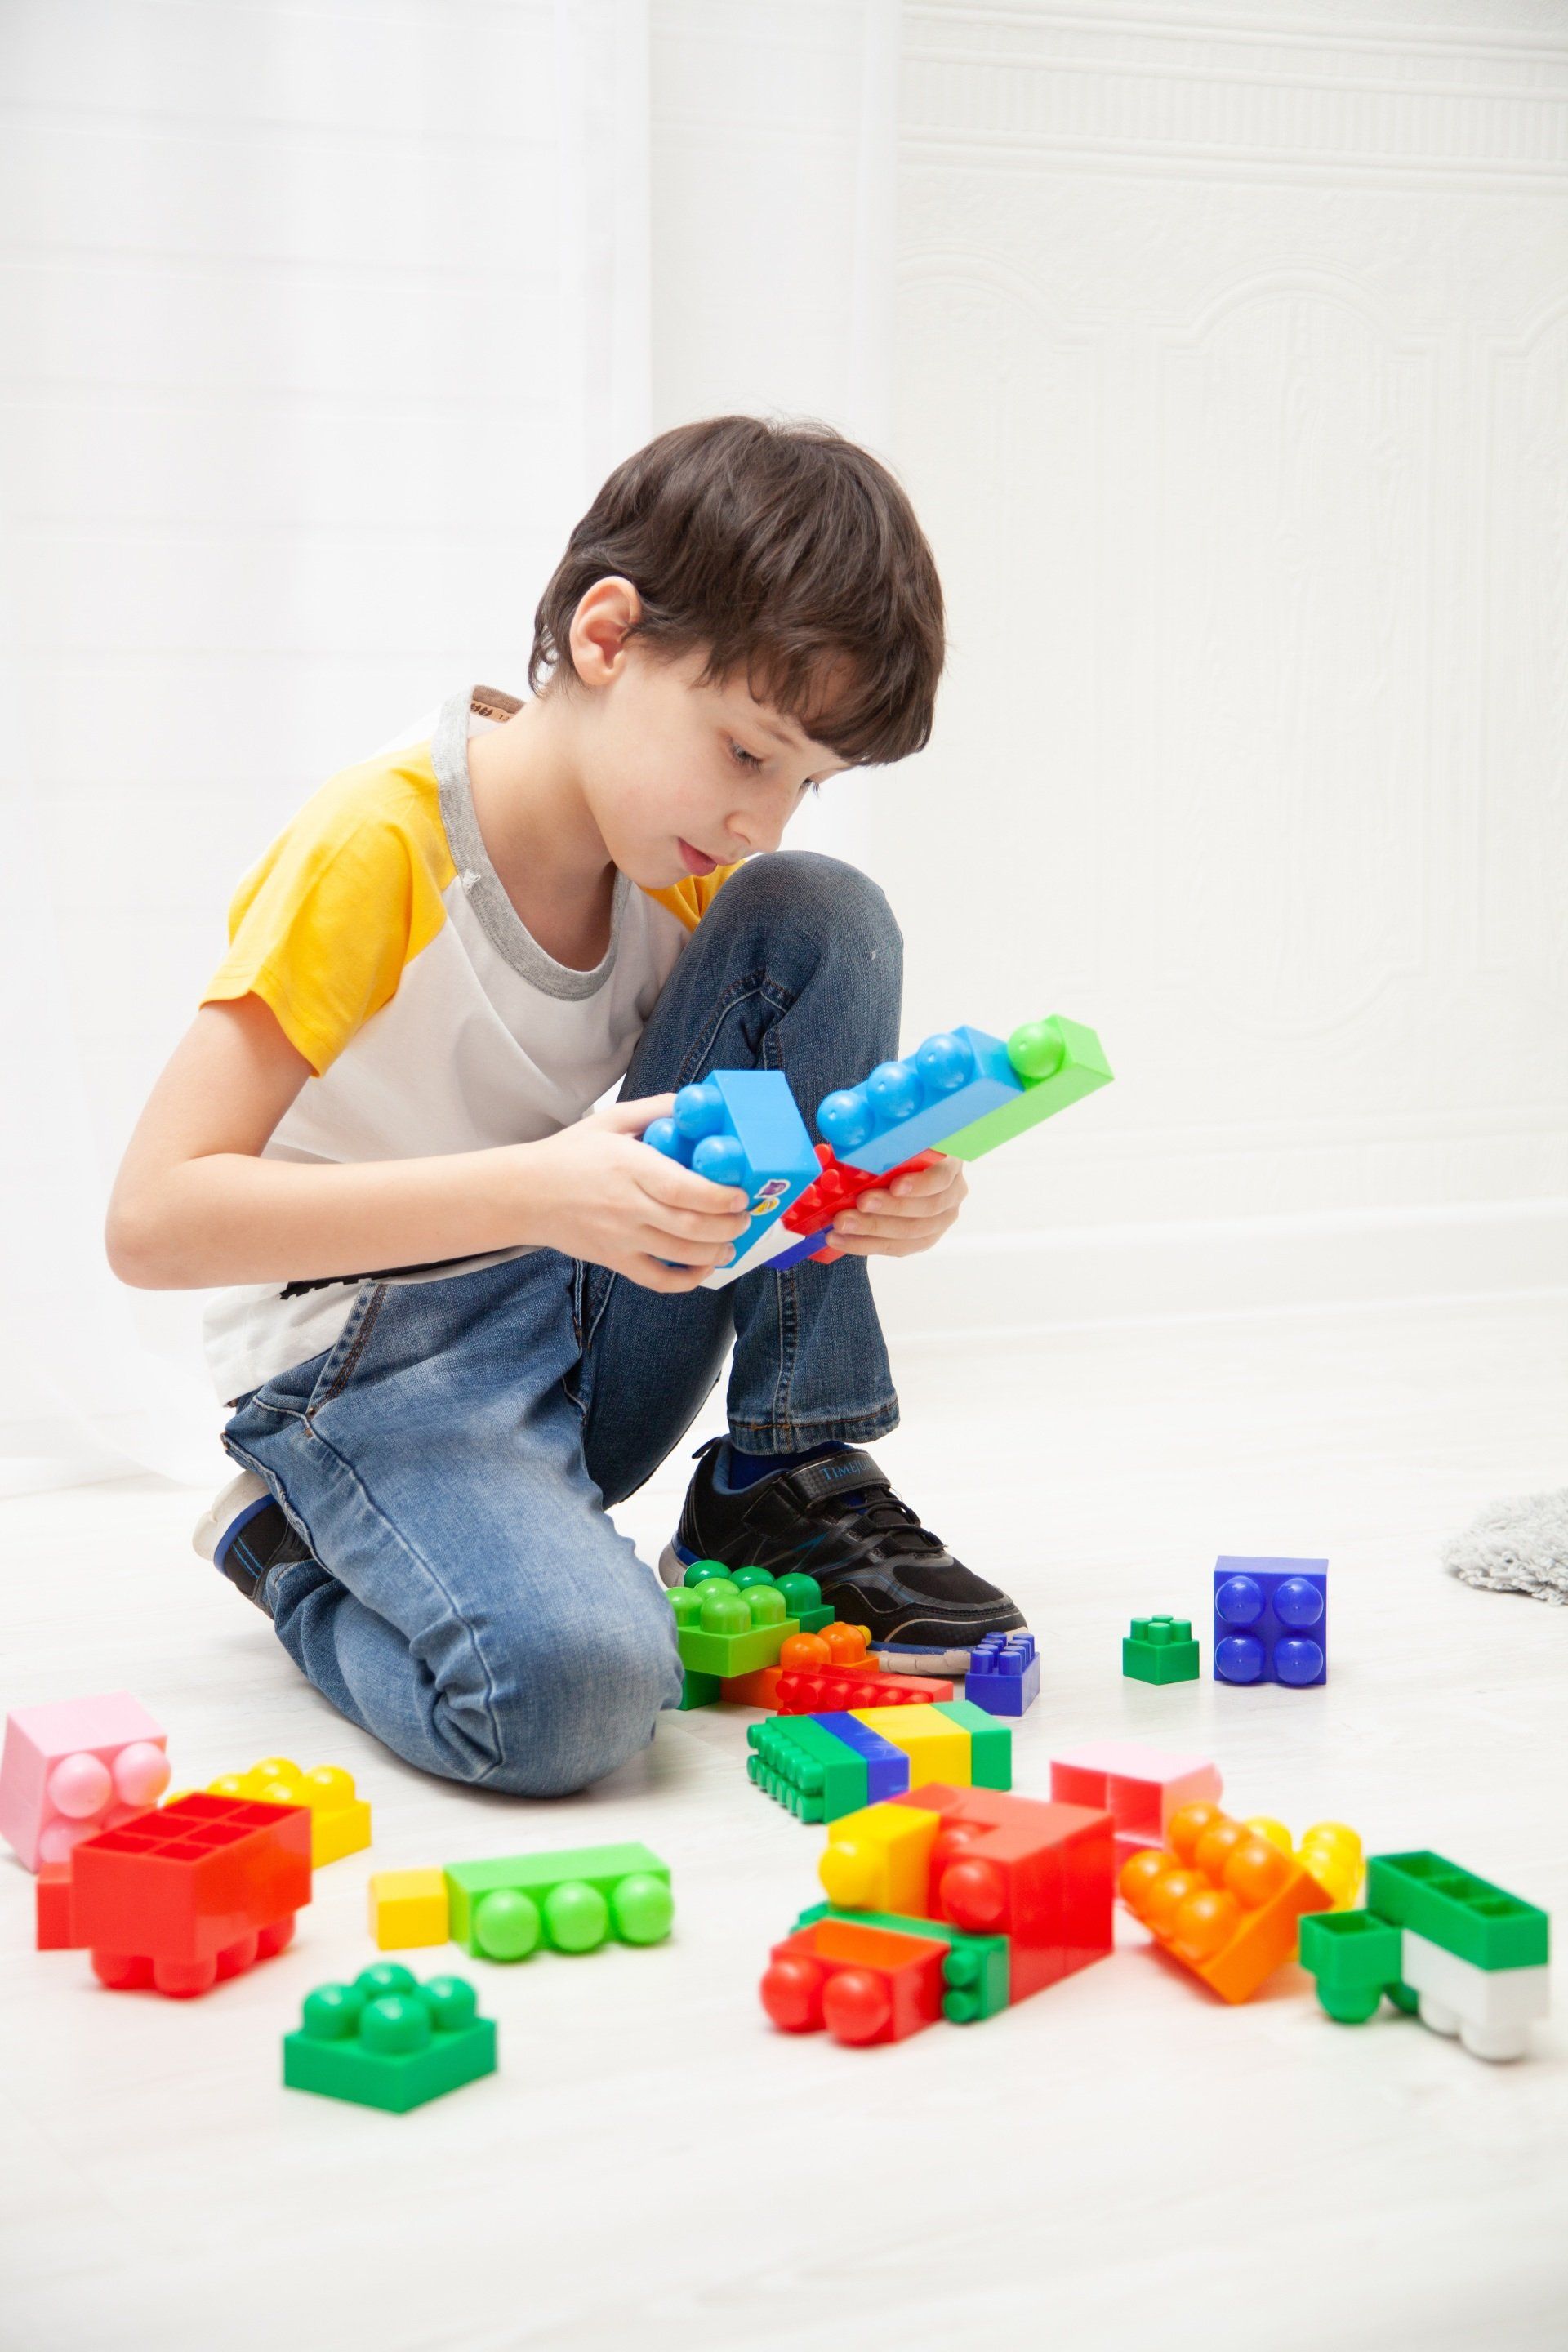 Dyslexics are creative and enjoy building  legos